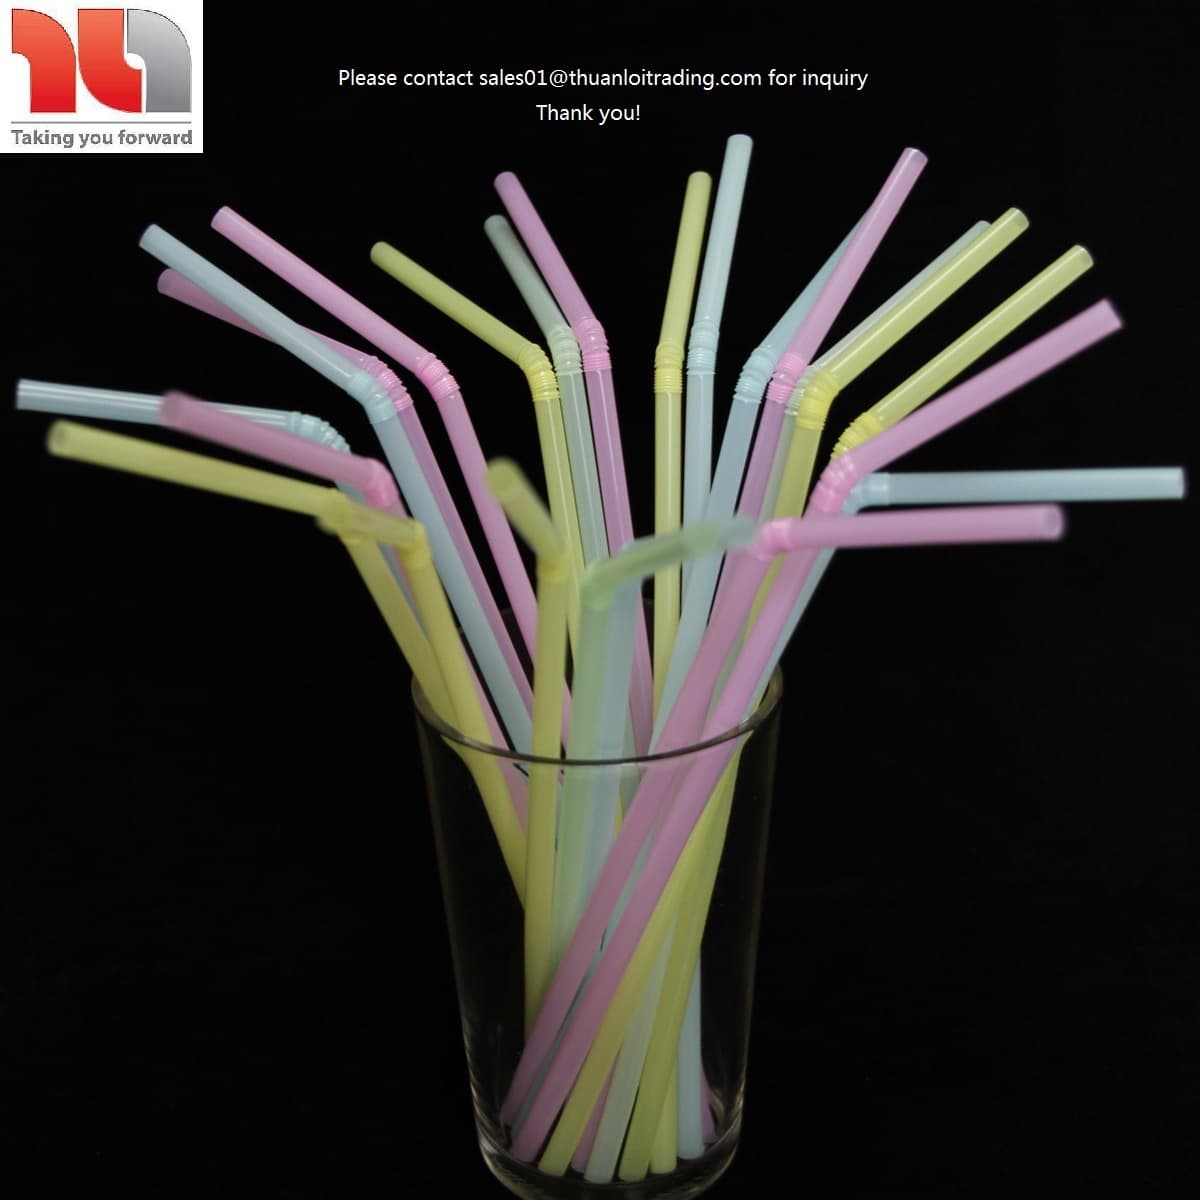 Flexible Drinking Straws - Neon colors